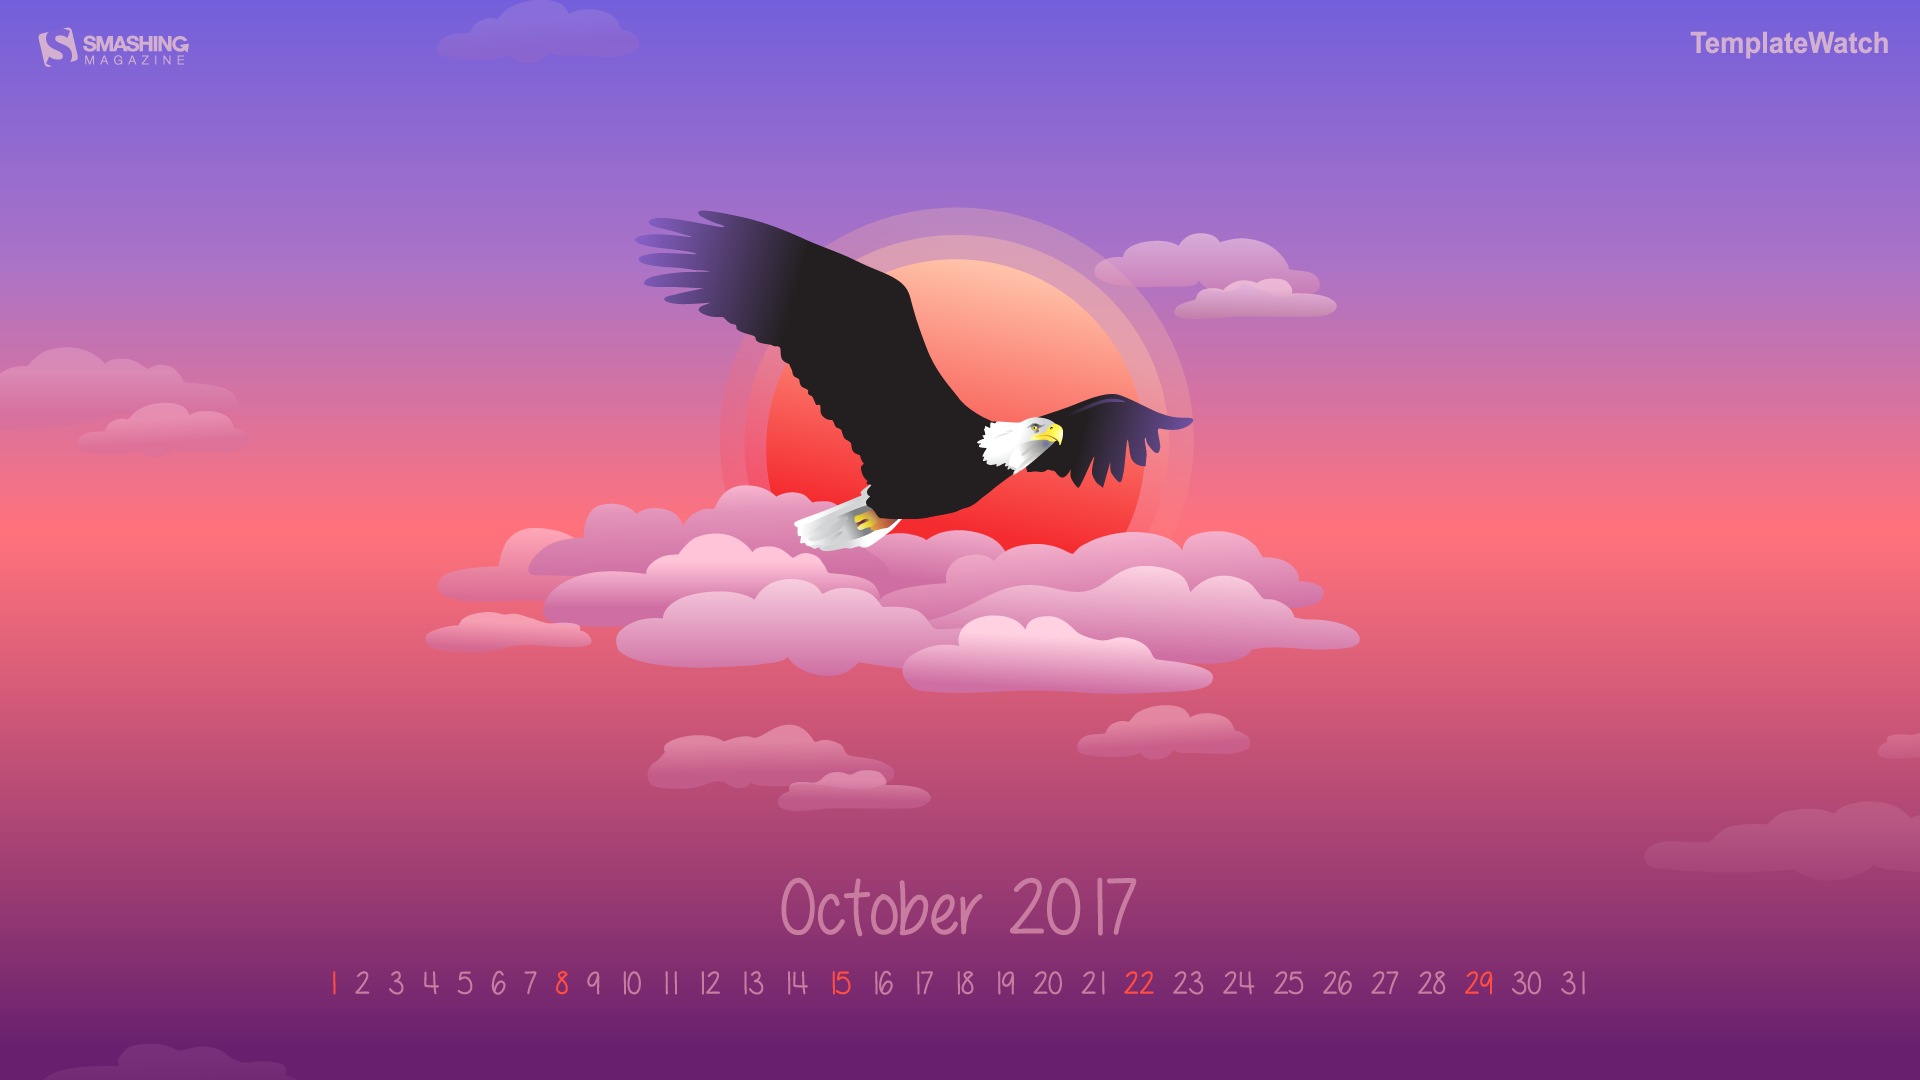 October 2017 calendar wallpaper #7 - 1920x1080